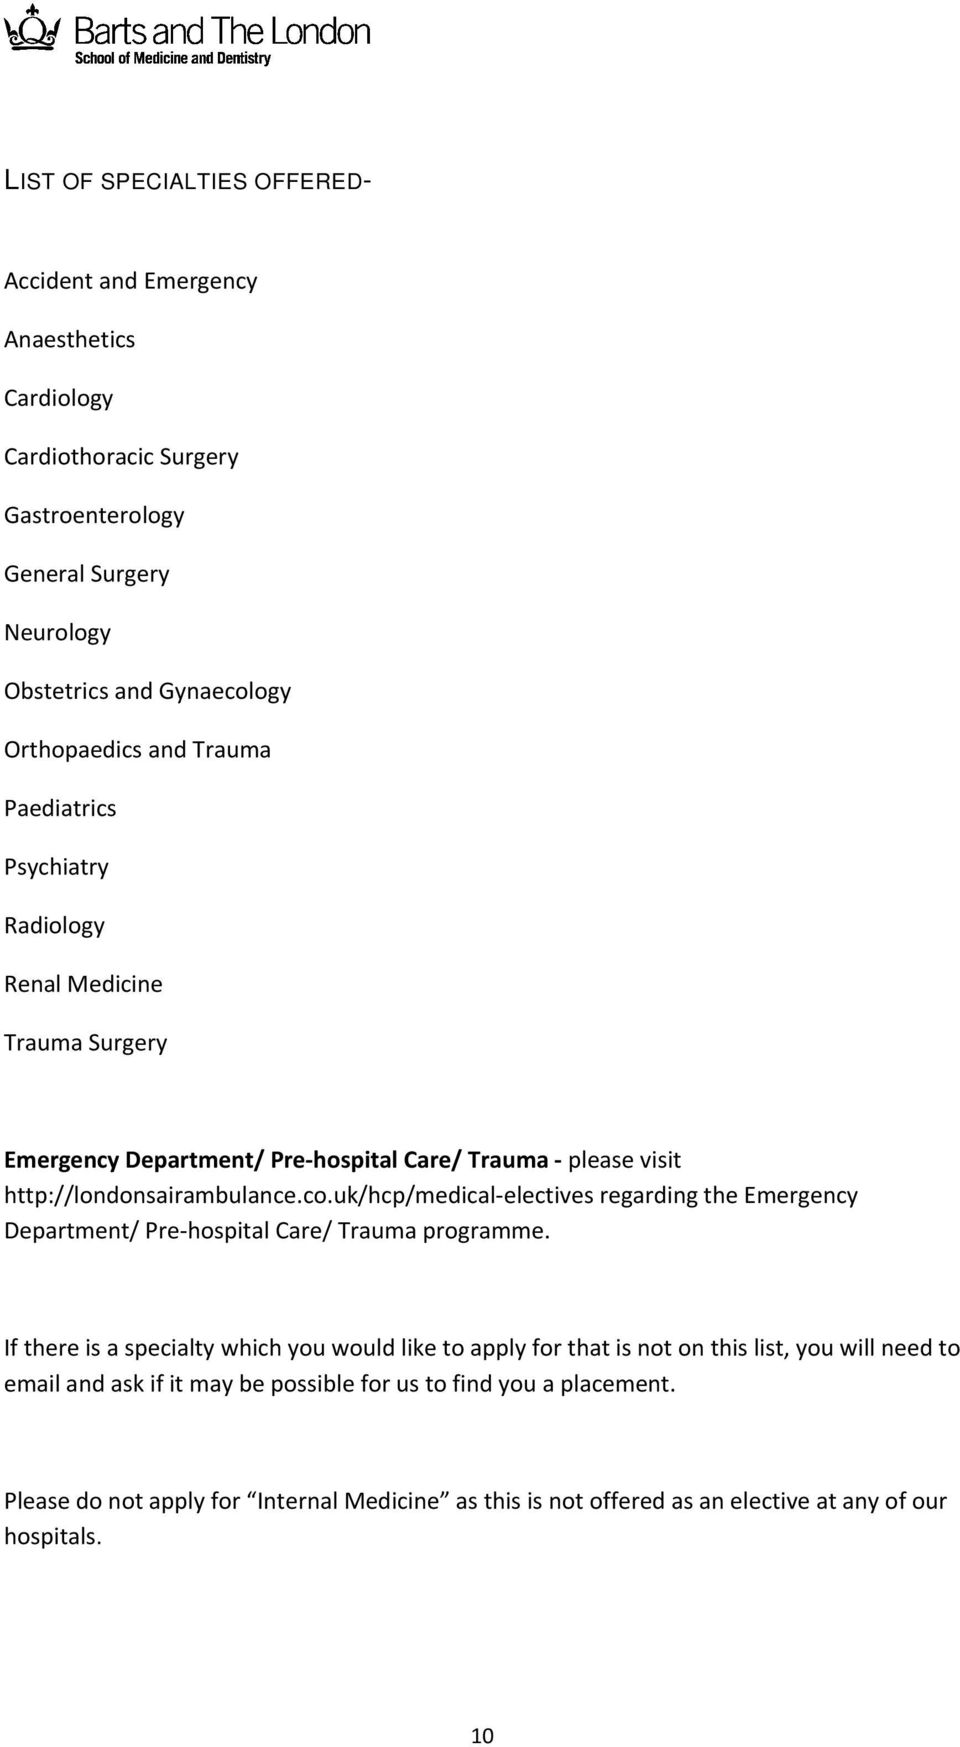 uk/hcp/medical electives regarding the Emergency Department/ Pre hospital Care/ Trauma programme.